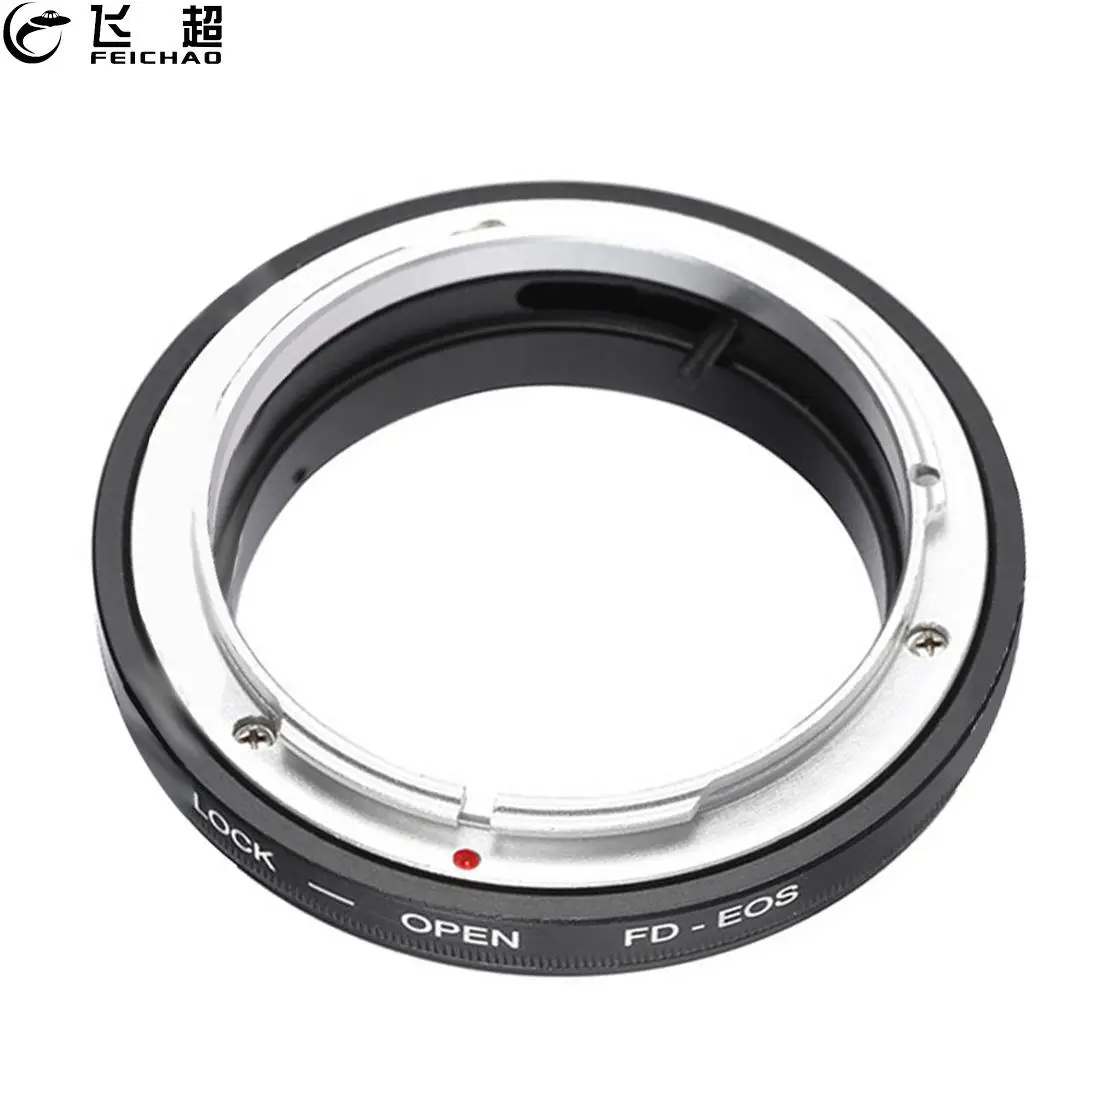 

FD-EOS/AF-NEX/M42-FD/LR-M4/3 M42 Крепление объектива для Sony NEX переходное кольцо для цифровой однообъективной зеркальной камеры CANON EOS для Nikon G объектив AI д...